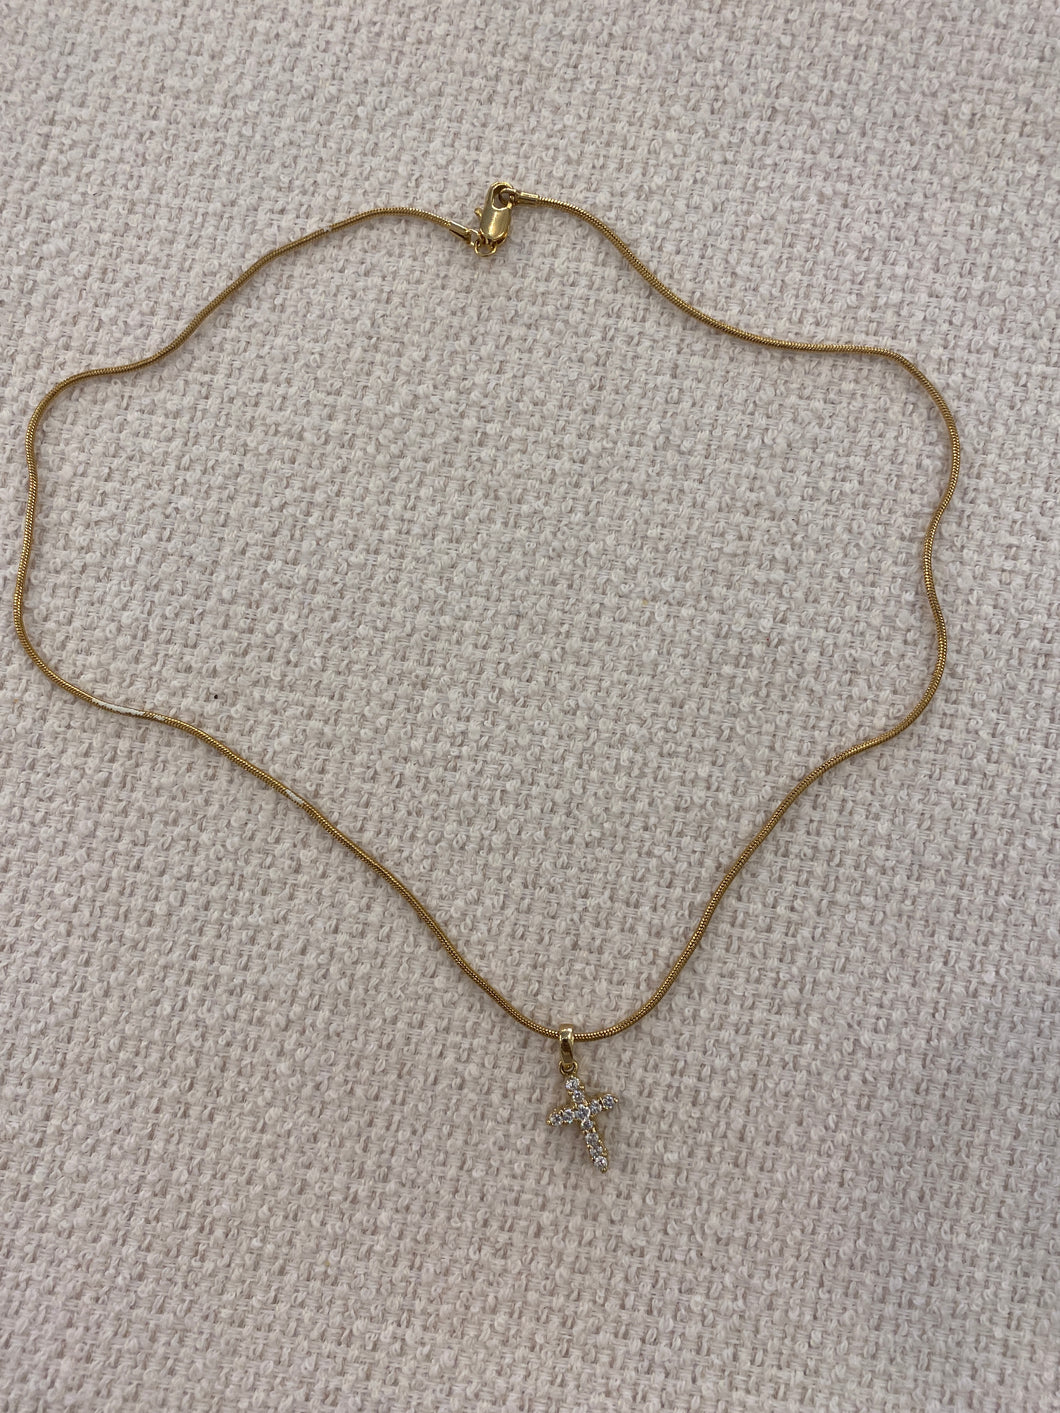 Necklace W/ Cross Pendant